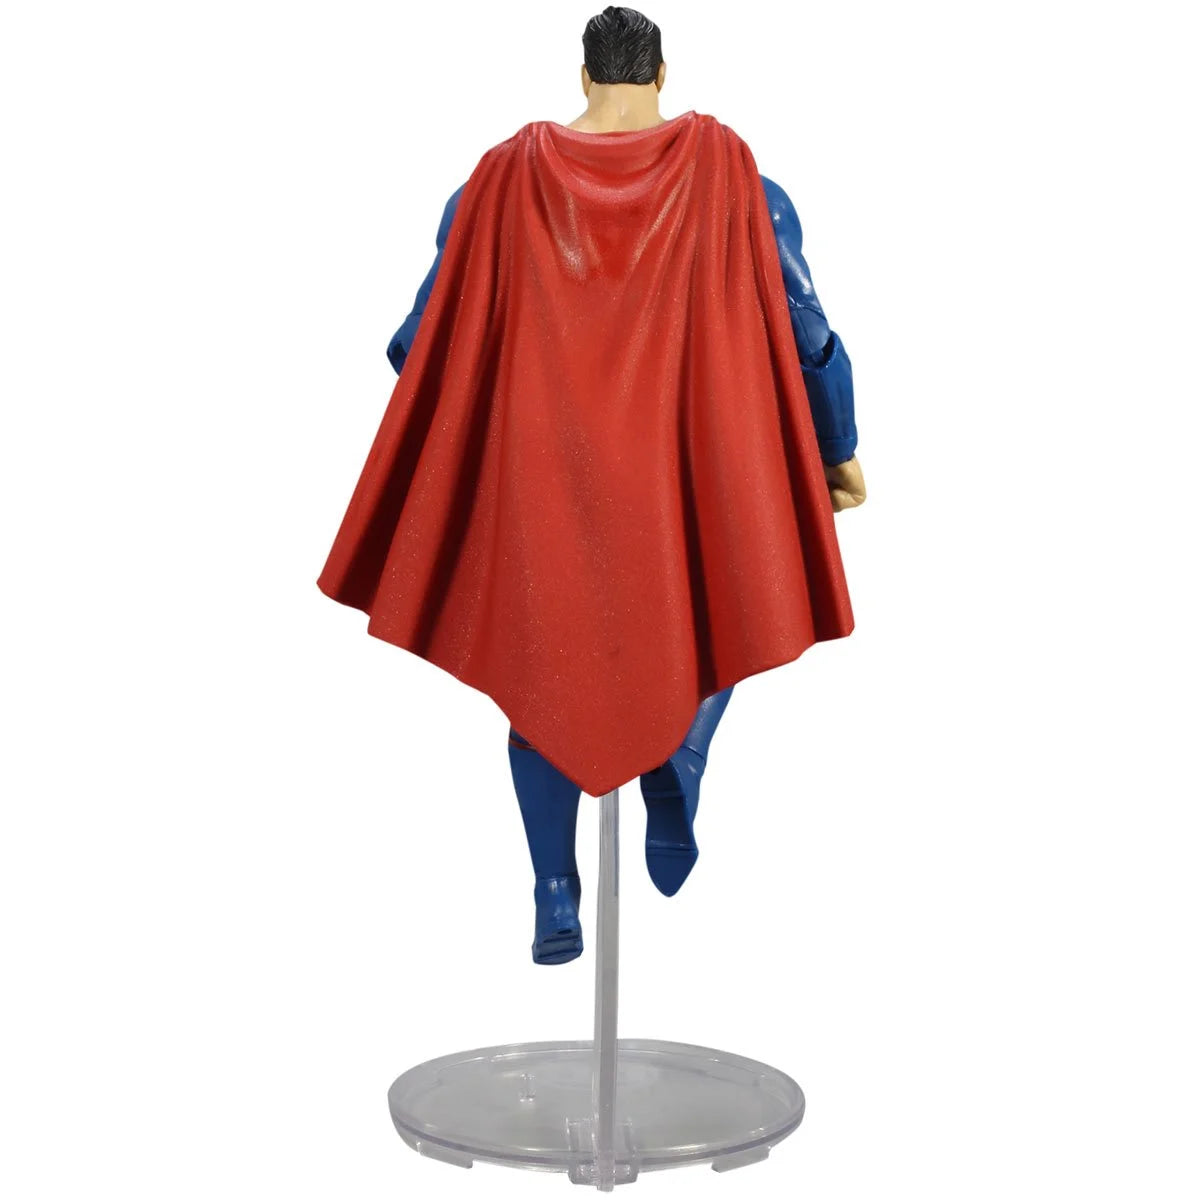 Superman Rebirth DC Multiverse Action Figure